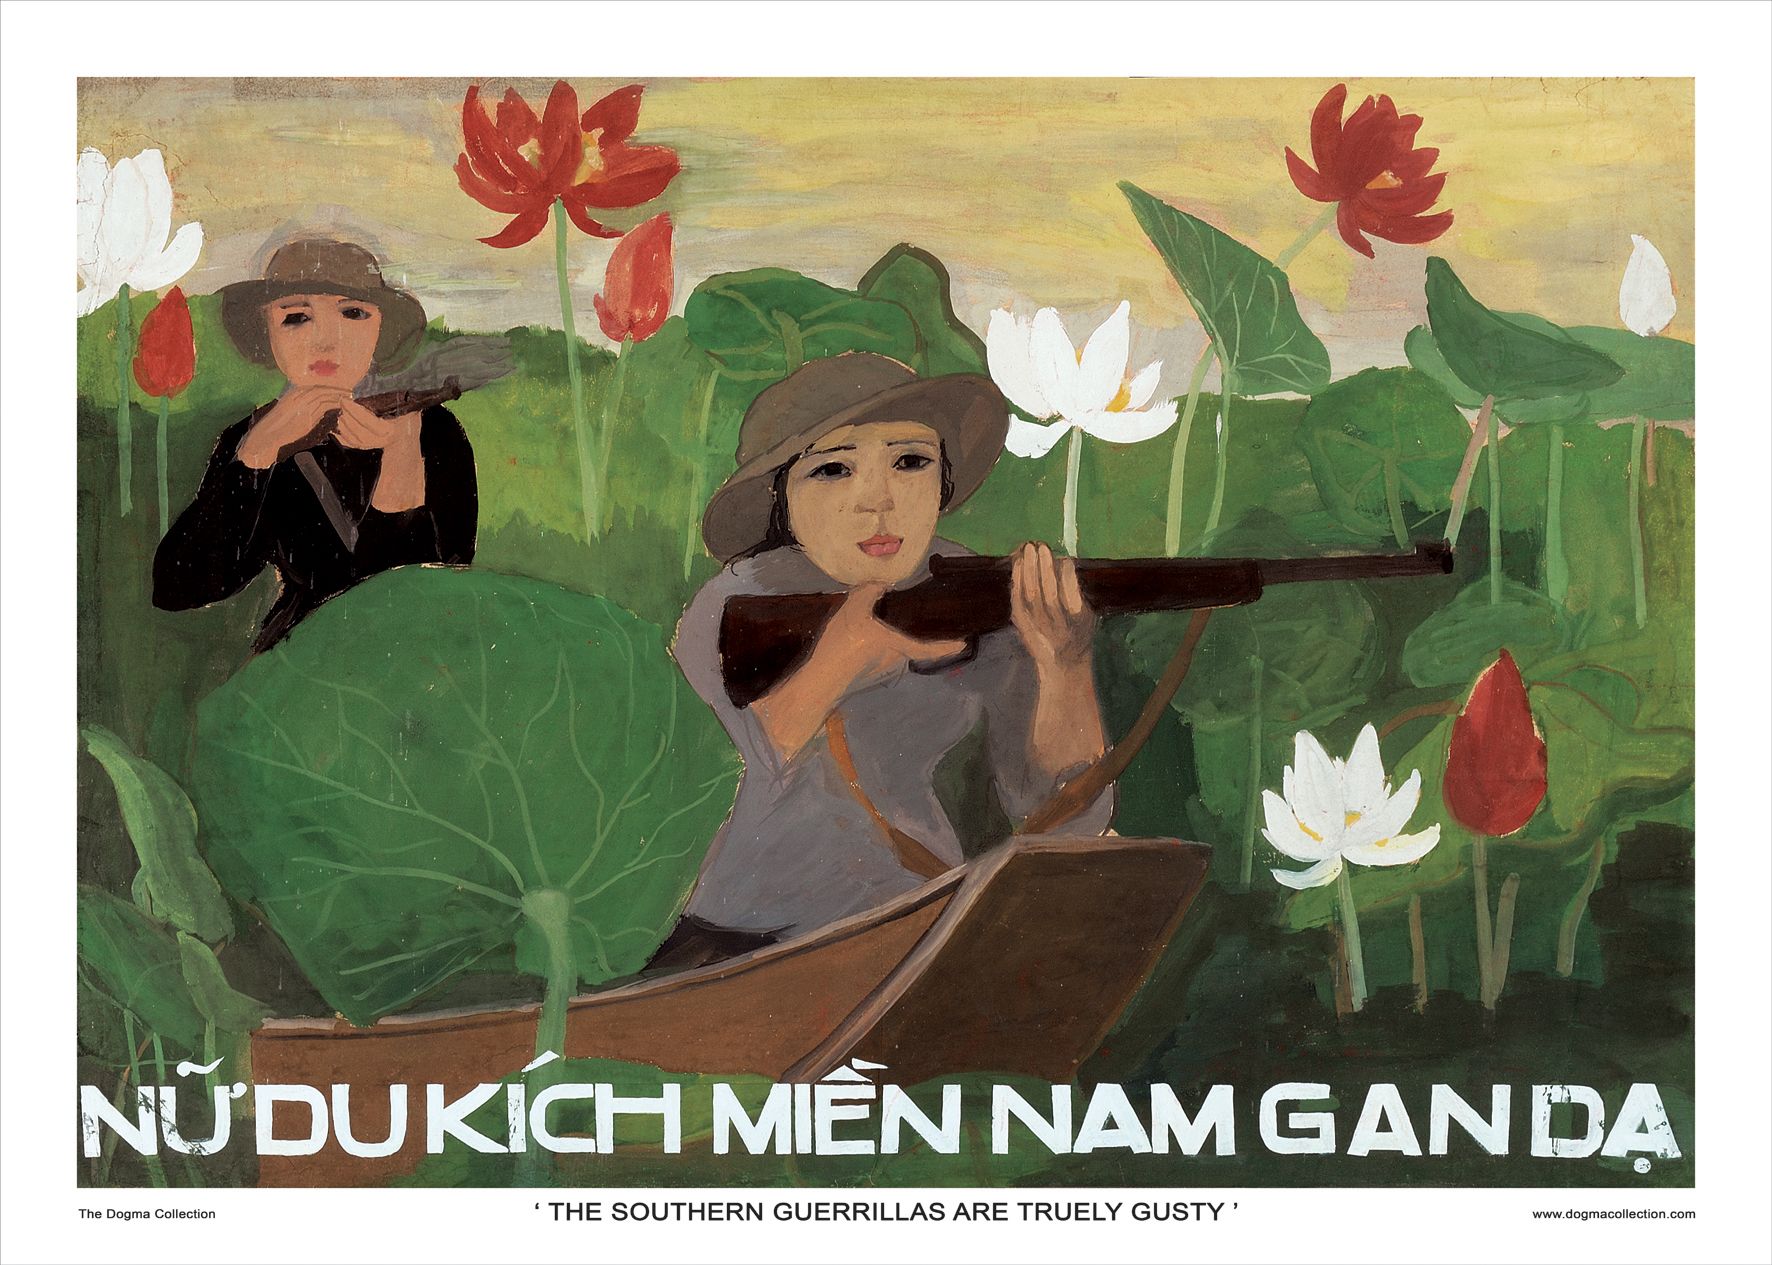 Vietnam propaganda posters give glimpse life in war | CNN